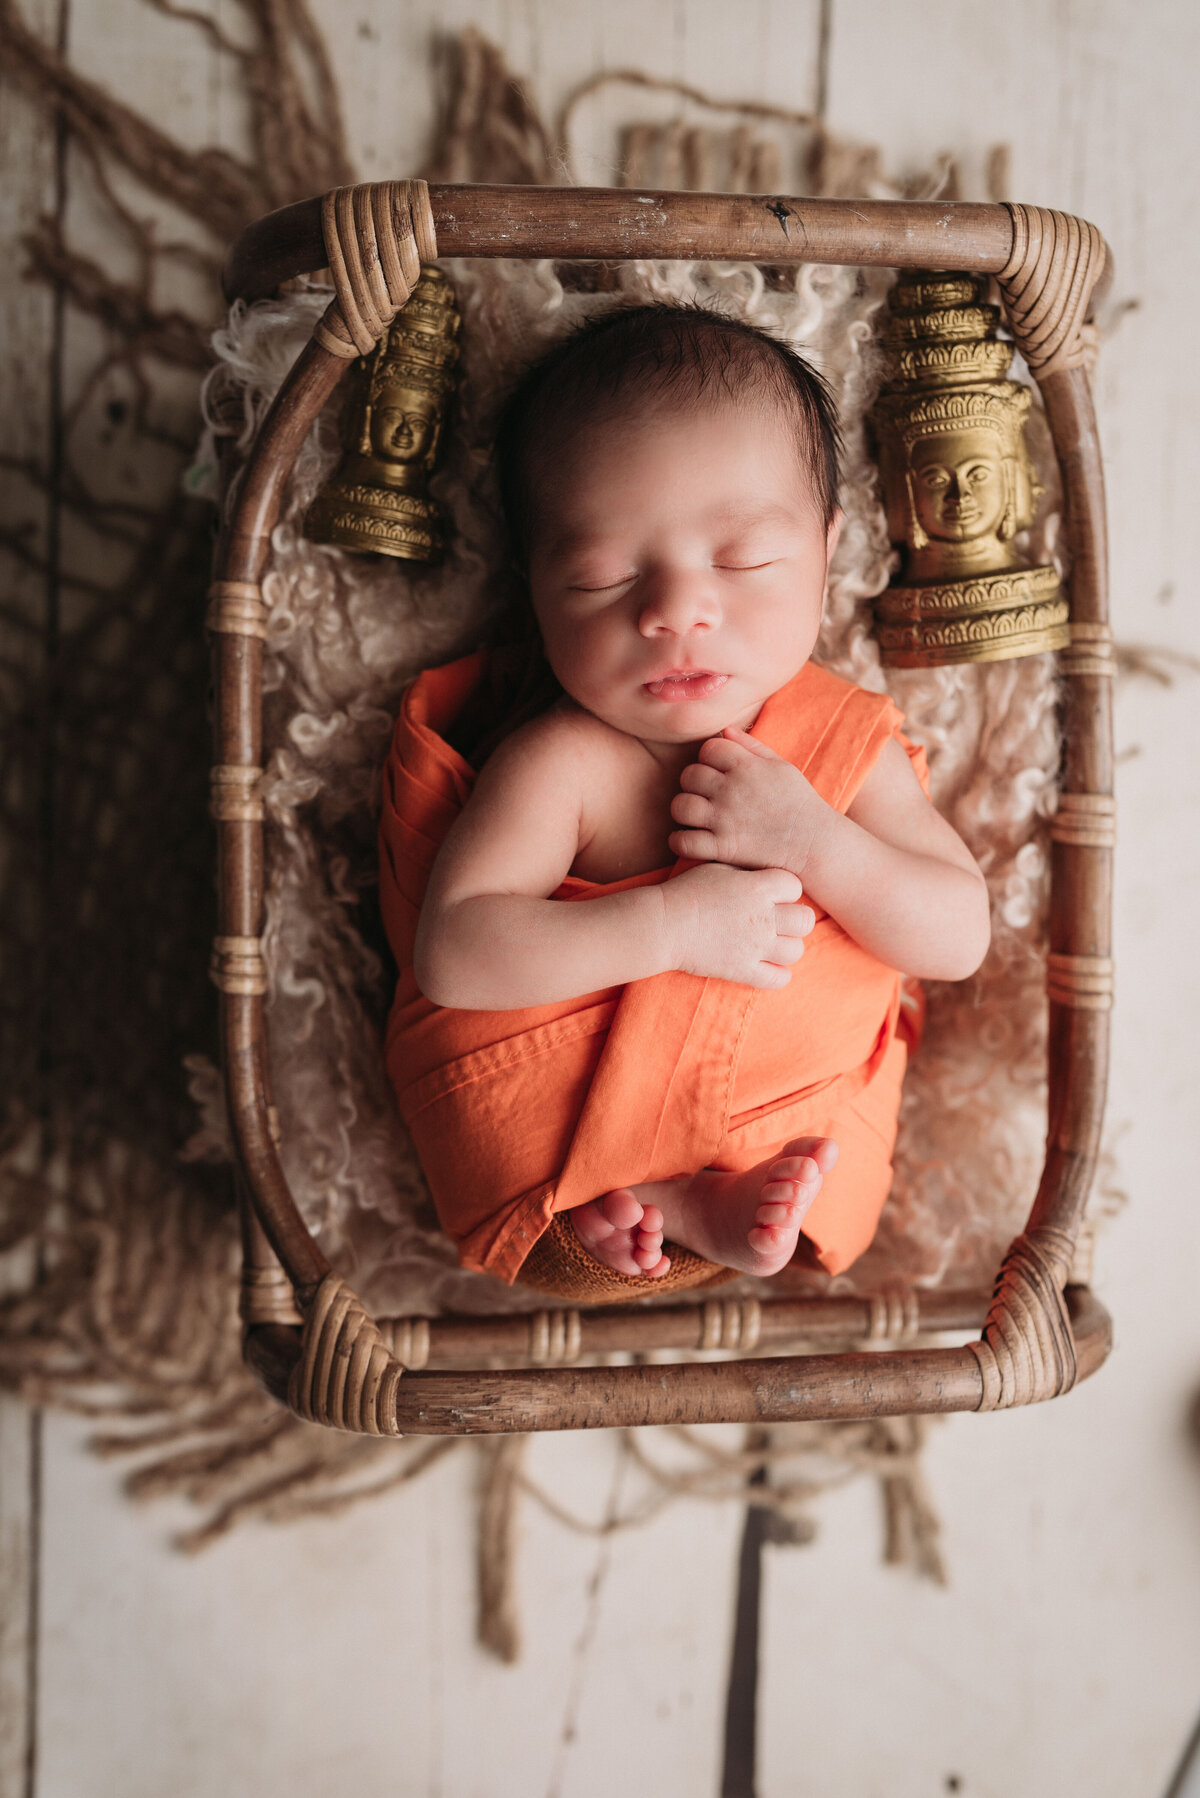 1 week old baby boy in orange wrap laying in brown basket with fur underneath him on white floor backdrop